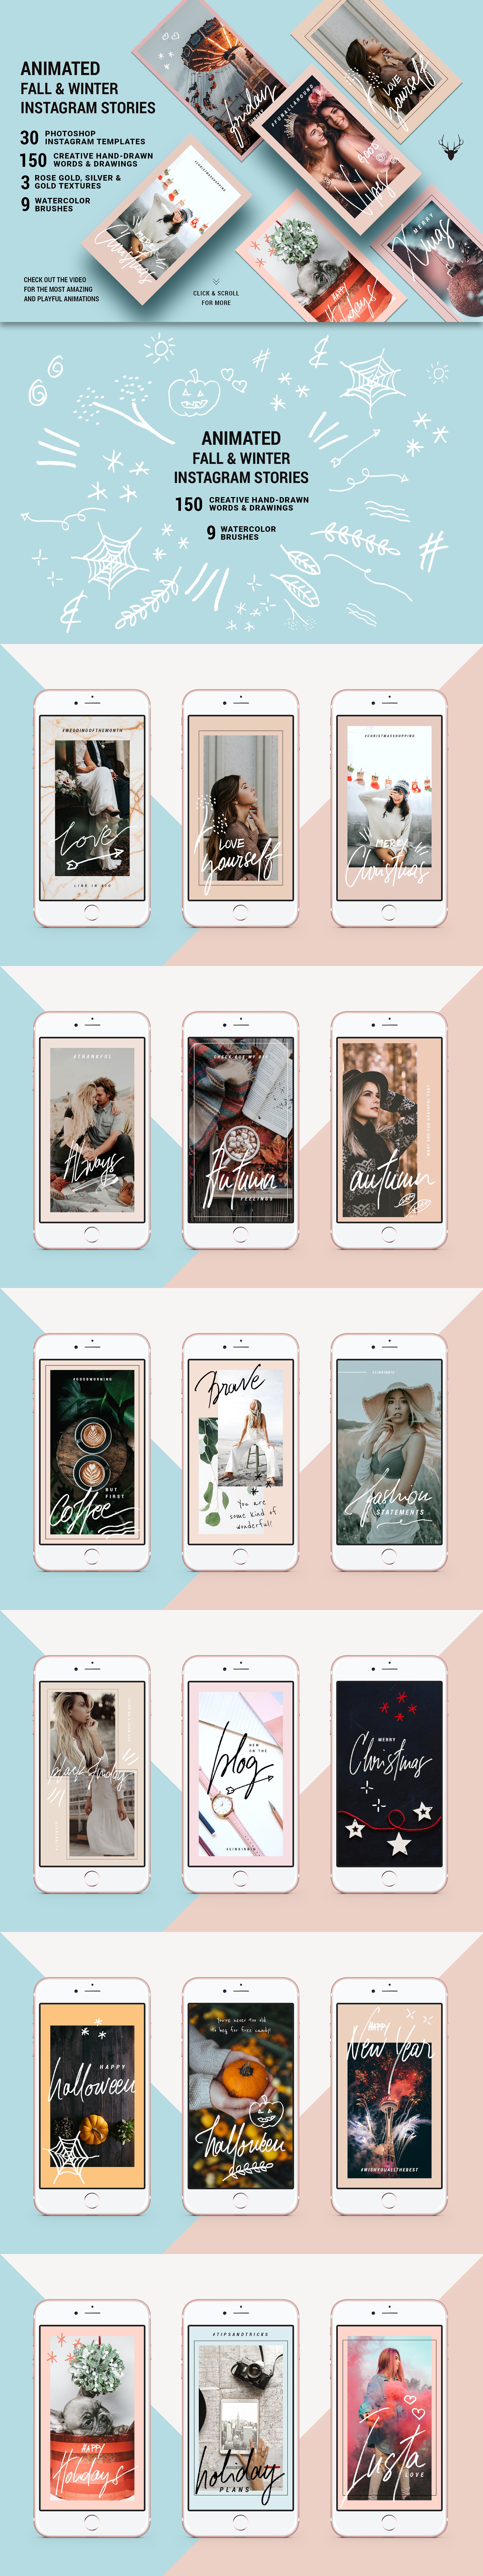 9.6G 现代时尚圣诞节新年女性服装摄影海报Instagram模板集合 MegaBundle Items From 2018插图1